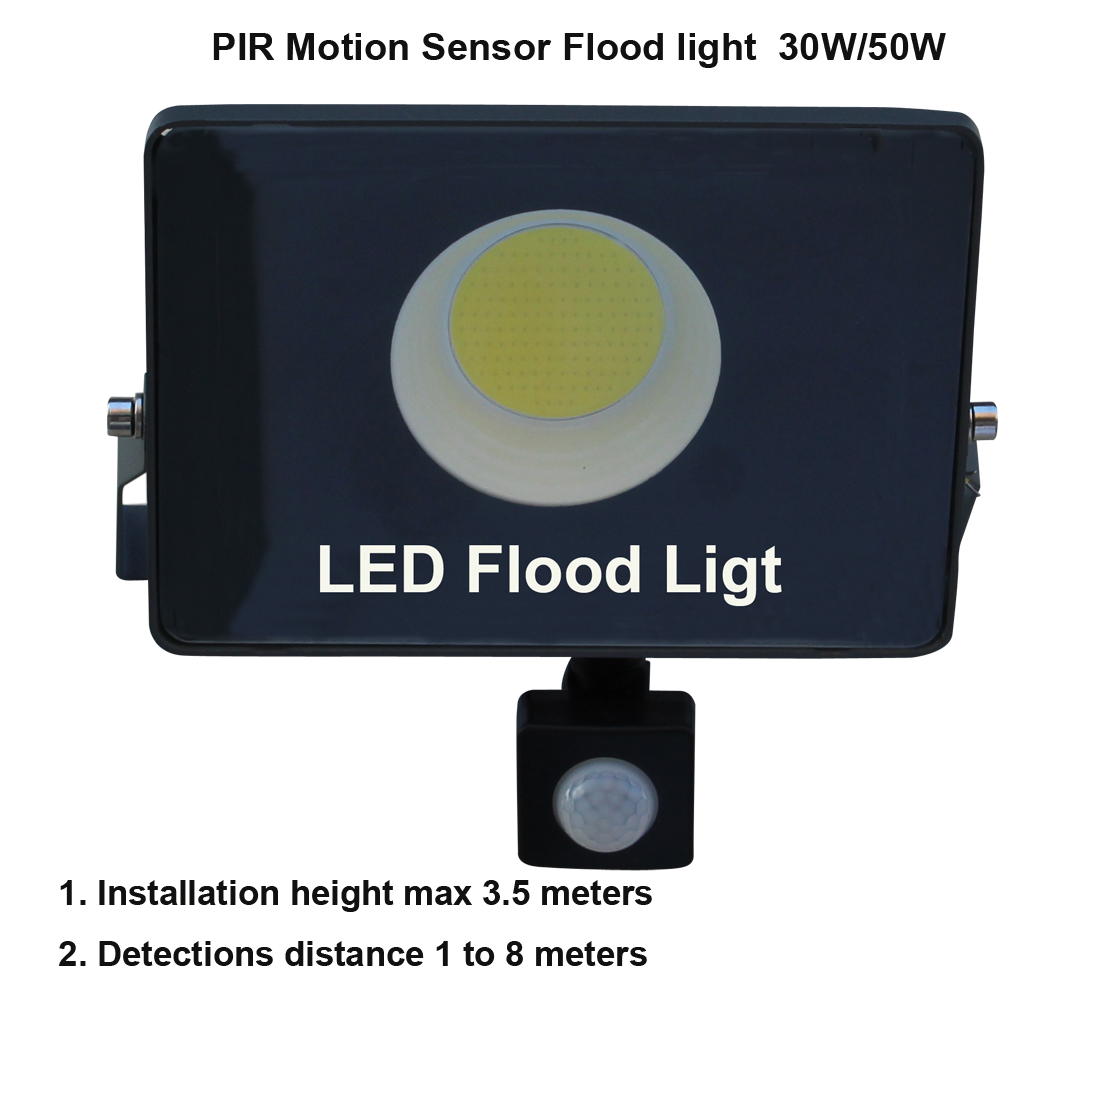 LED Induction lamp Flood light PIR motion sensor indoor and outdoor lighting decorative lighting home street garden 30W 50W 100W